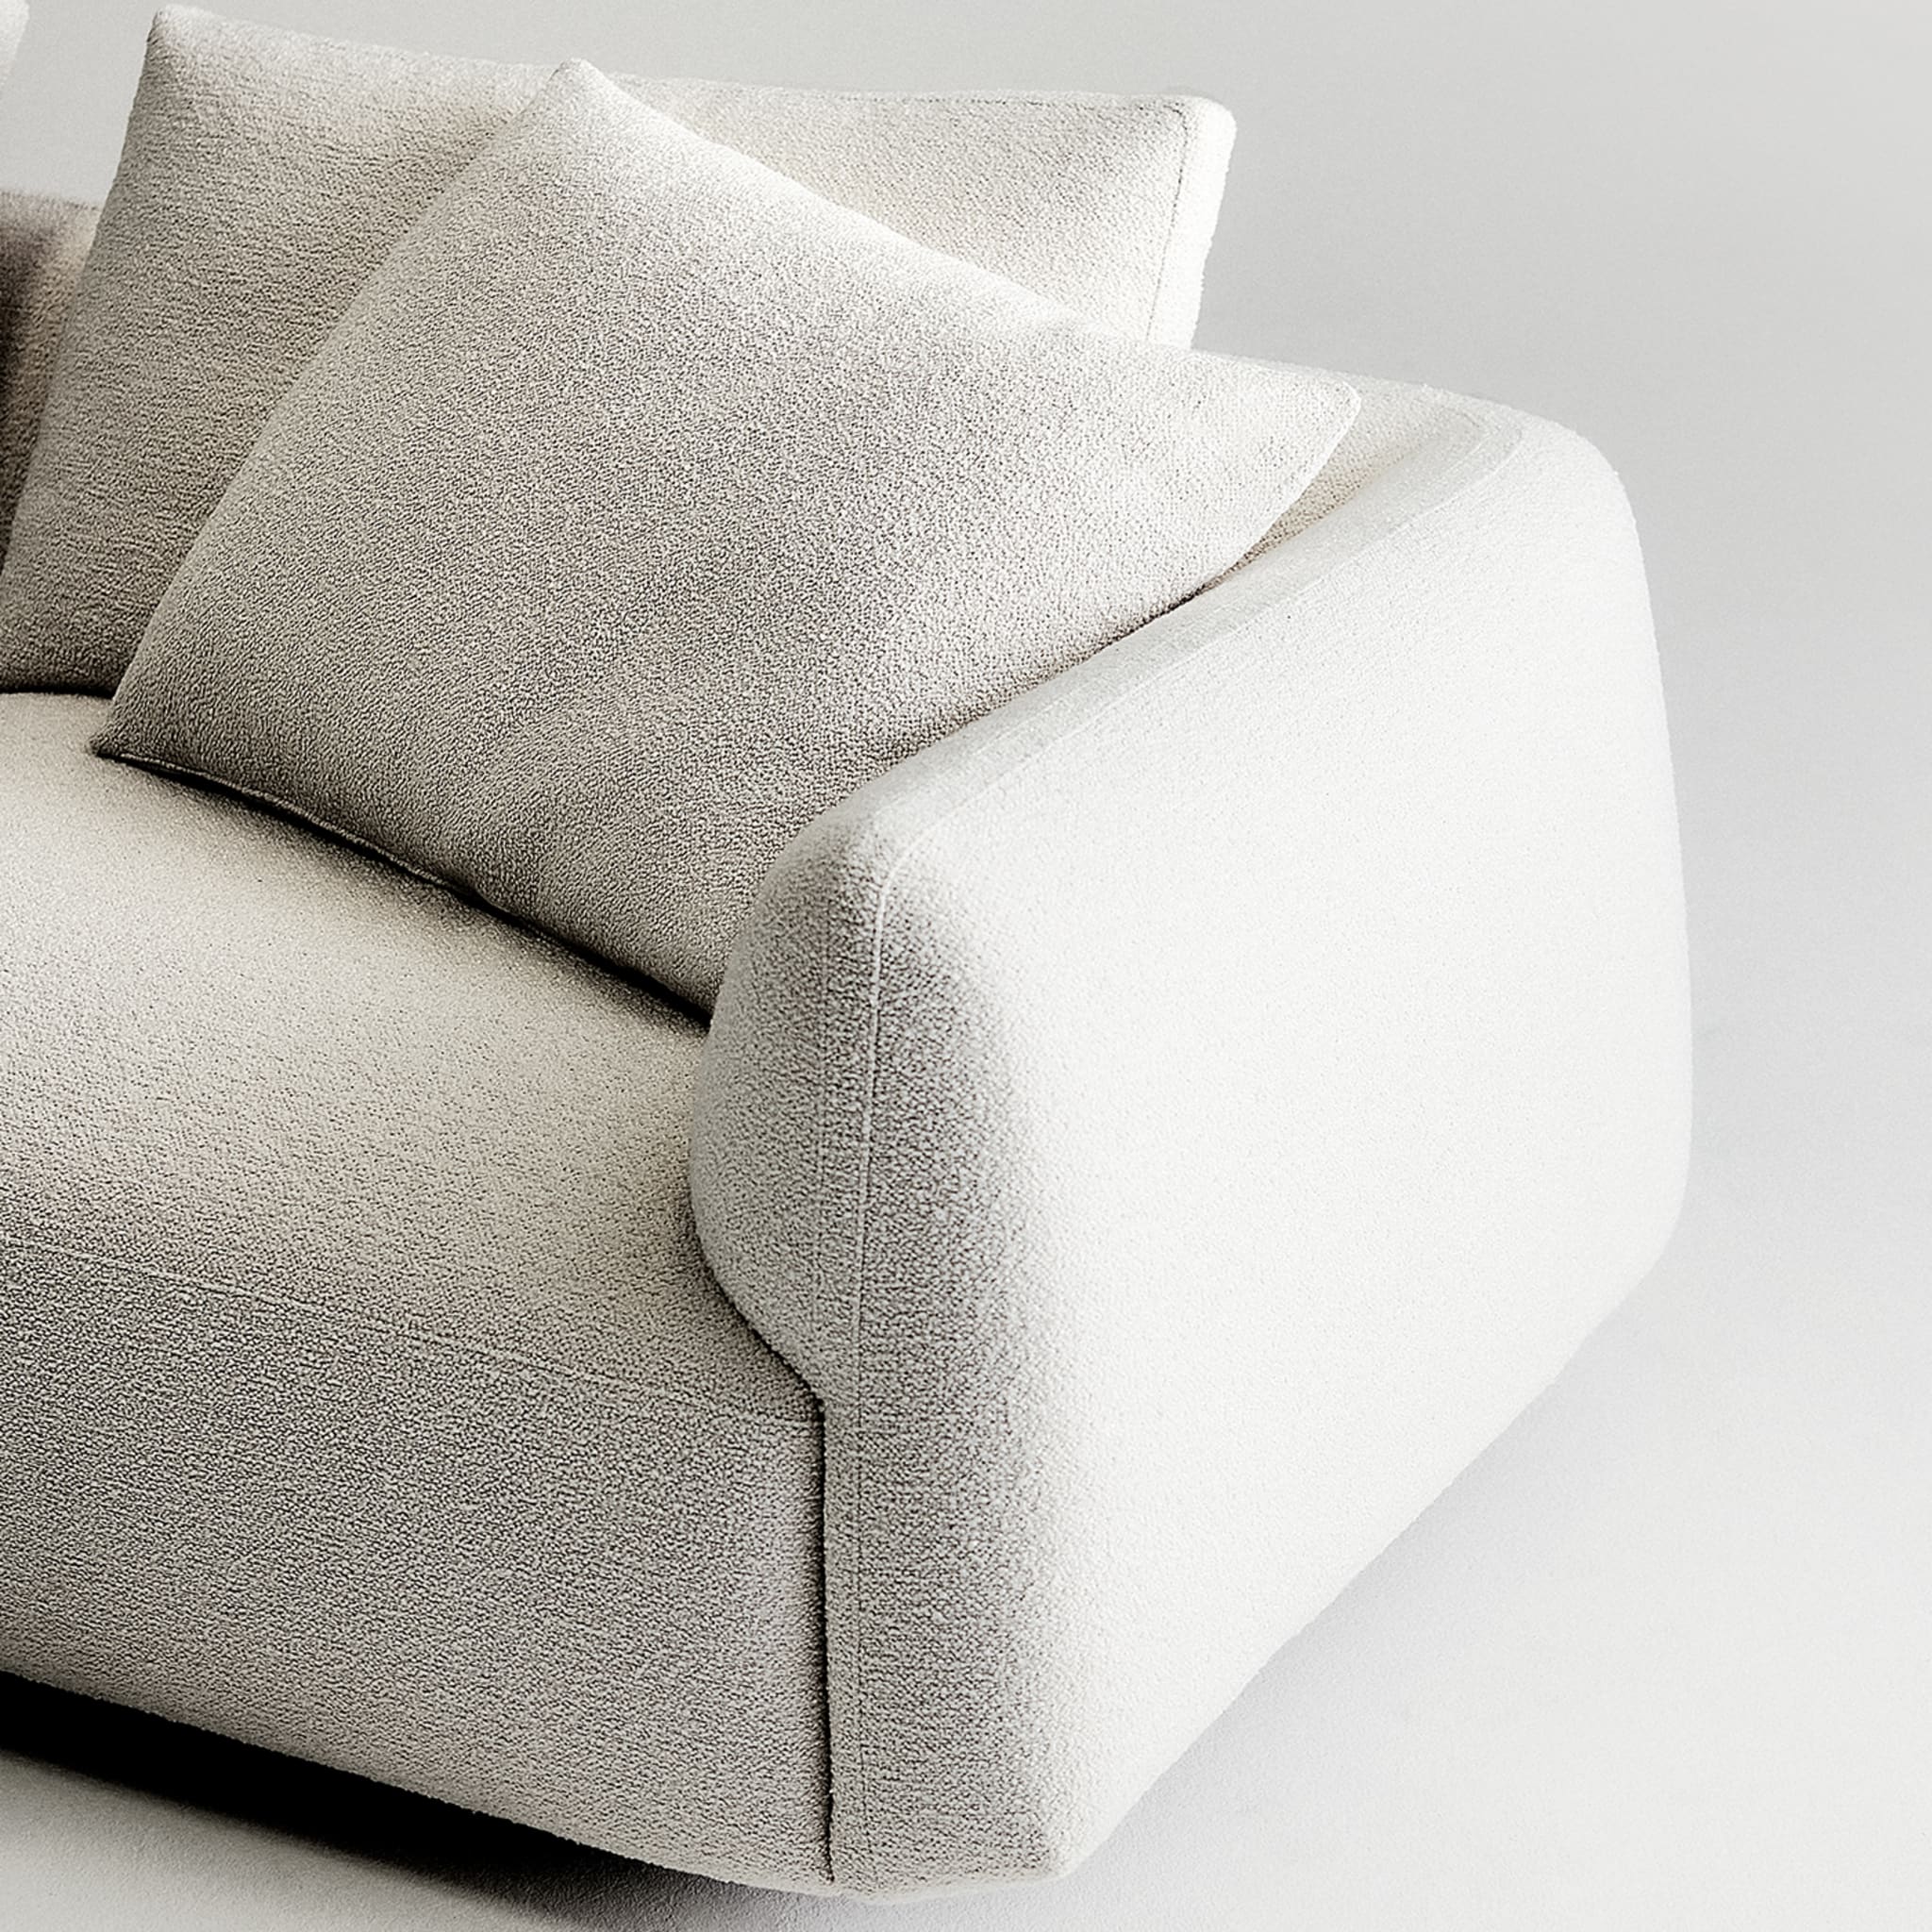 Naxos 3-sitzer weißes sofa von Ludovica + Roberto Palomba - Alternative Ansicht 1